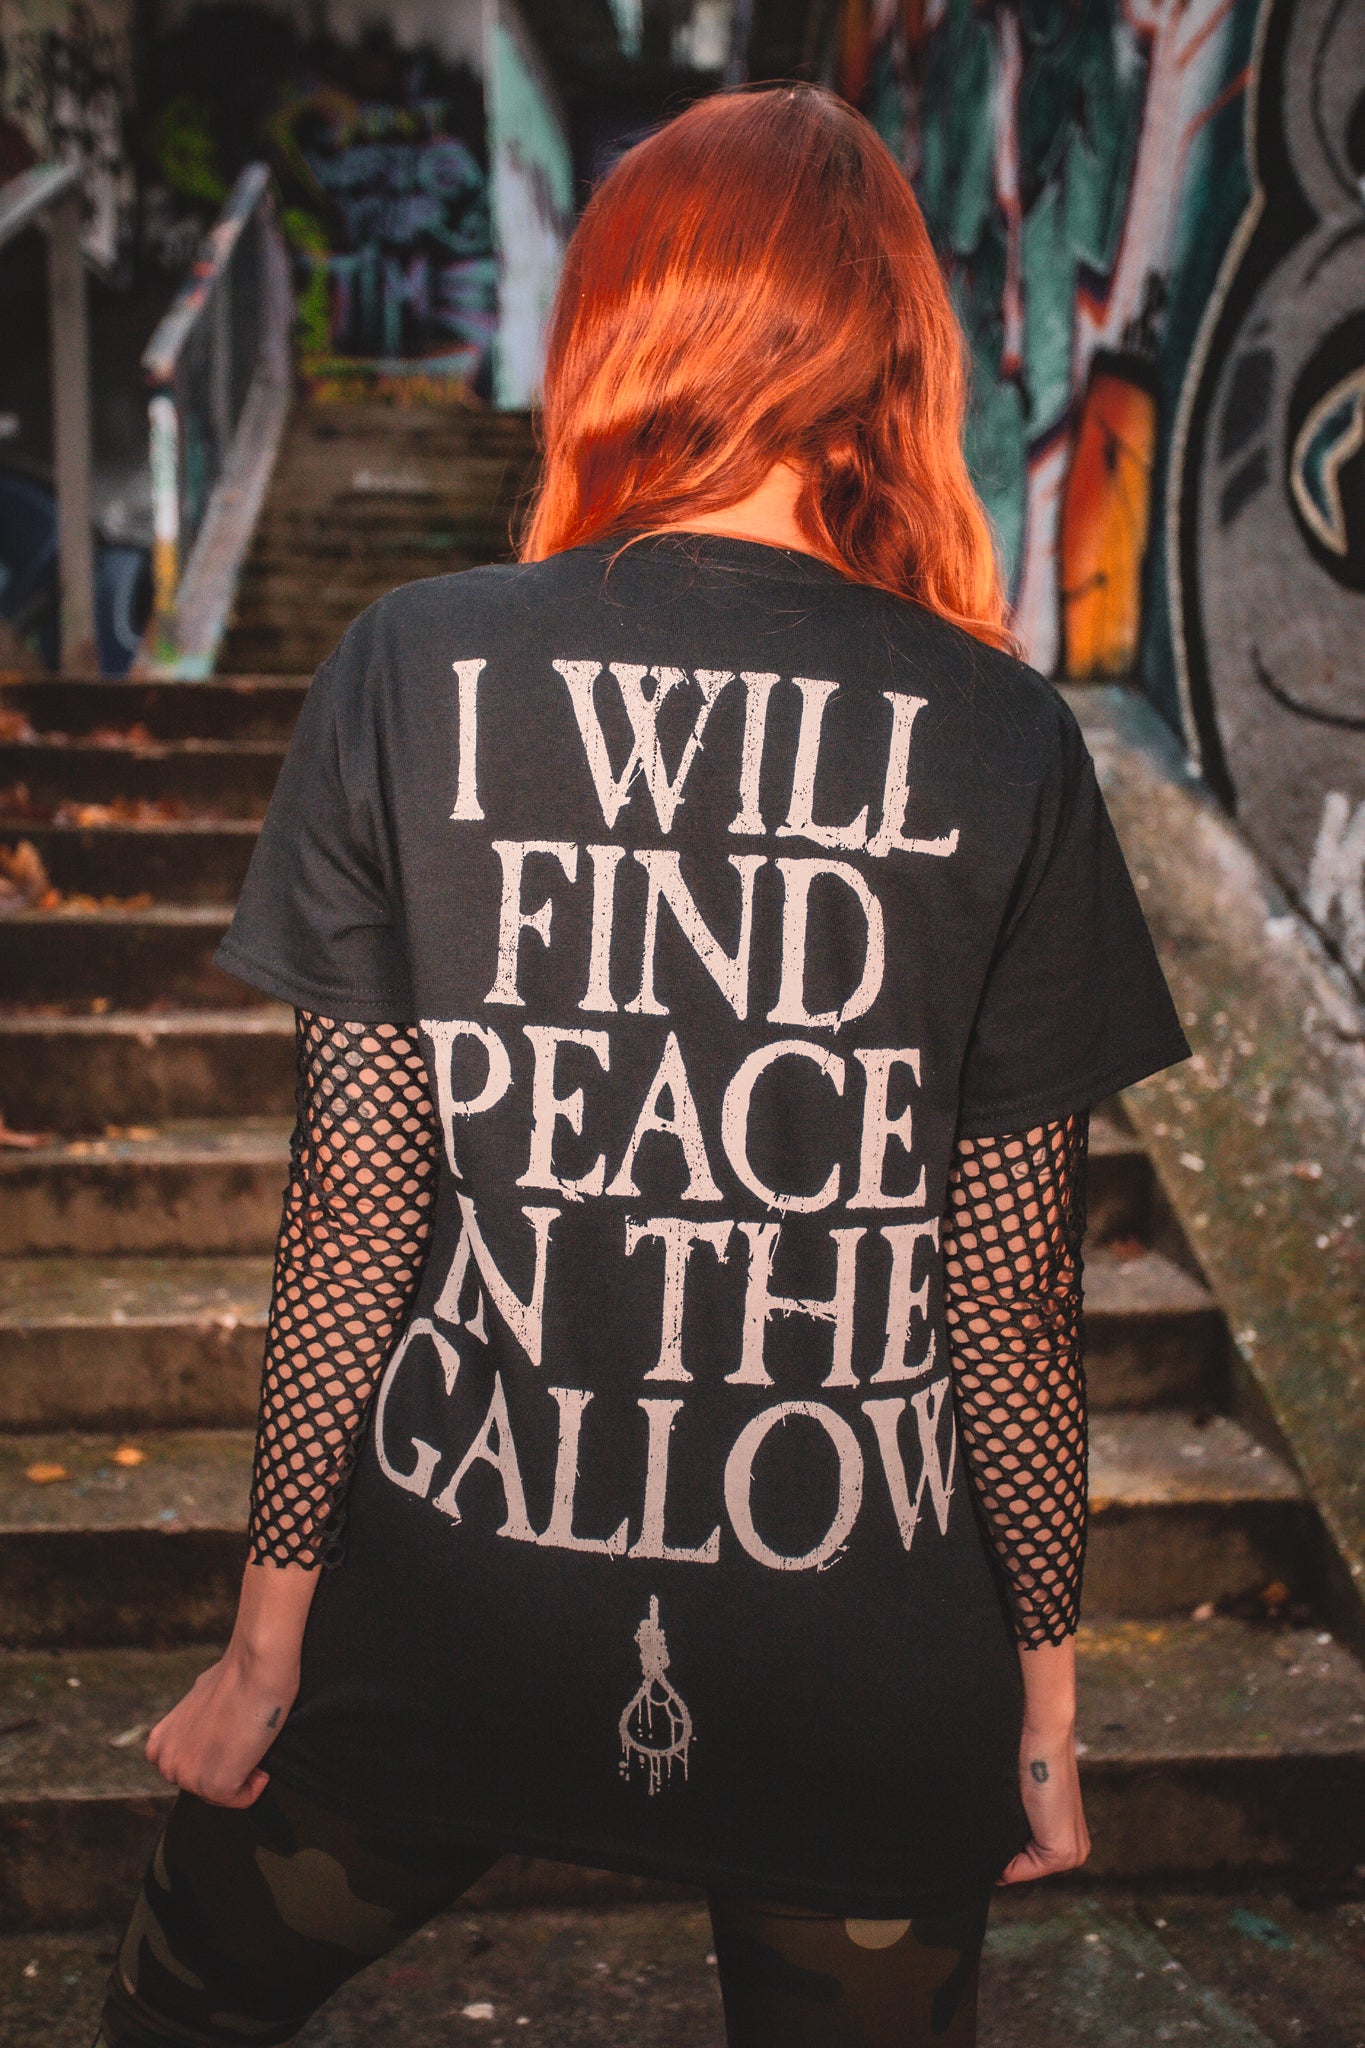 The Gallow Shirt